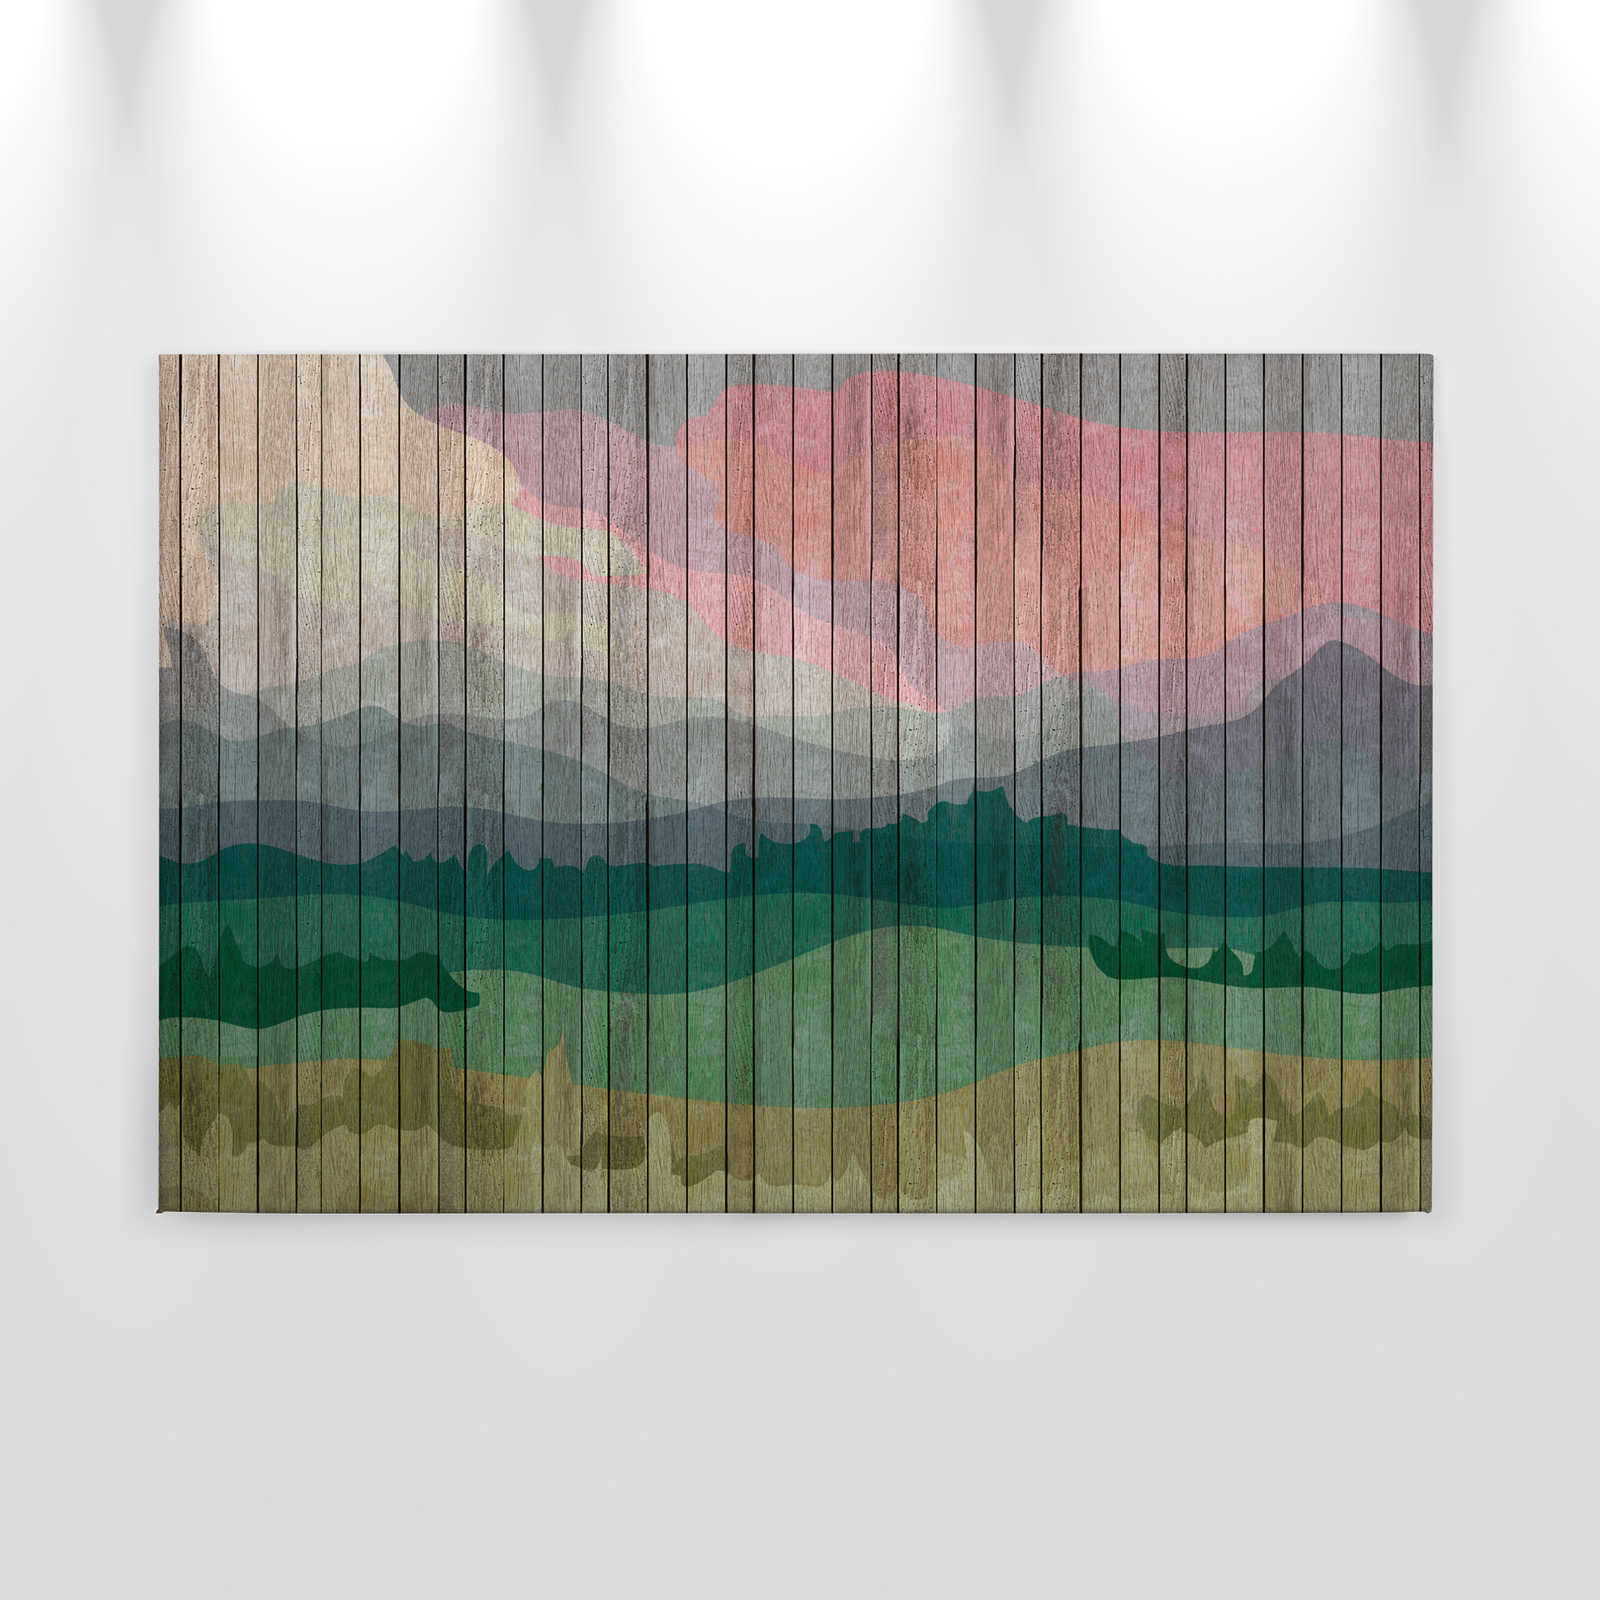             Mountains 2 - modern canvas picture mountain landscape & board optics - 0,90 m x 0,60 m
        